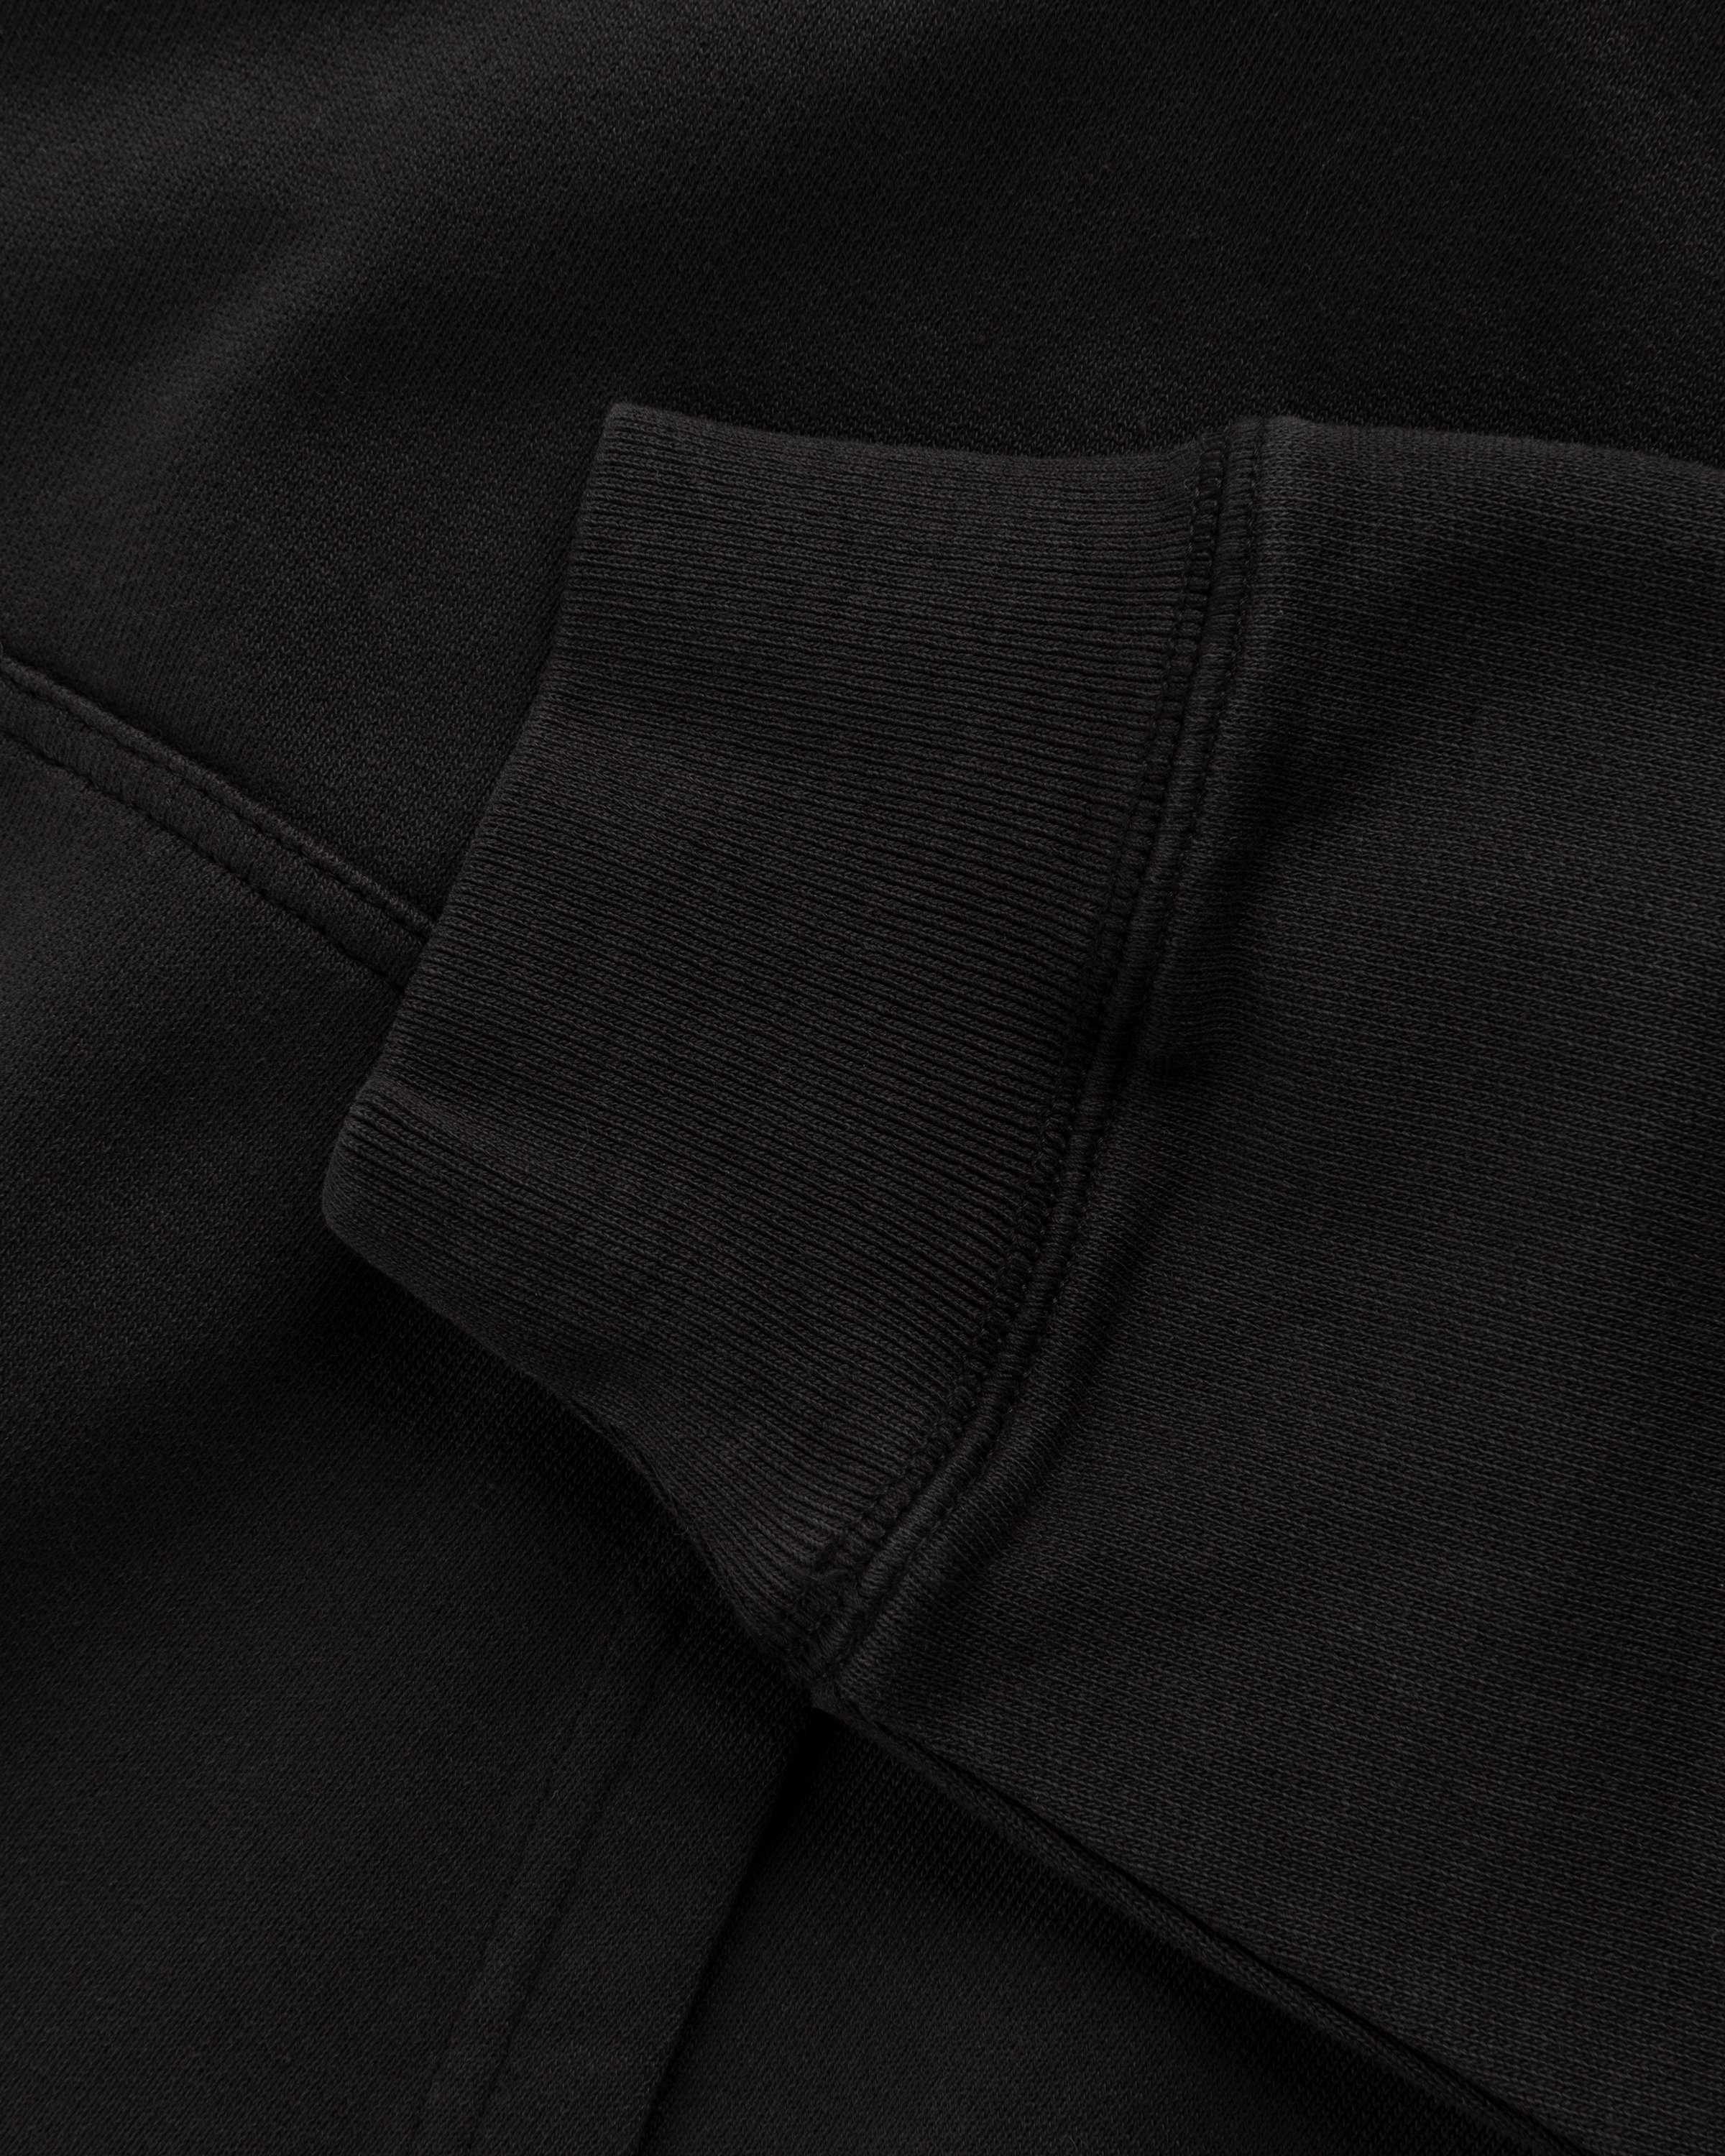 AFFXWRKS - Standardized Hoodie Black - Clothing - Black - Image 3